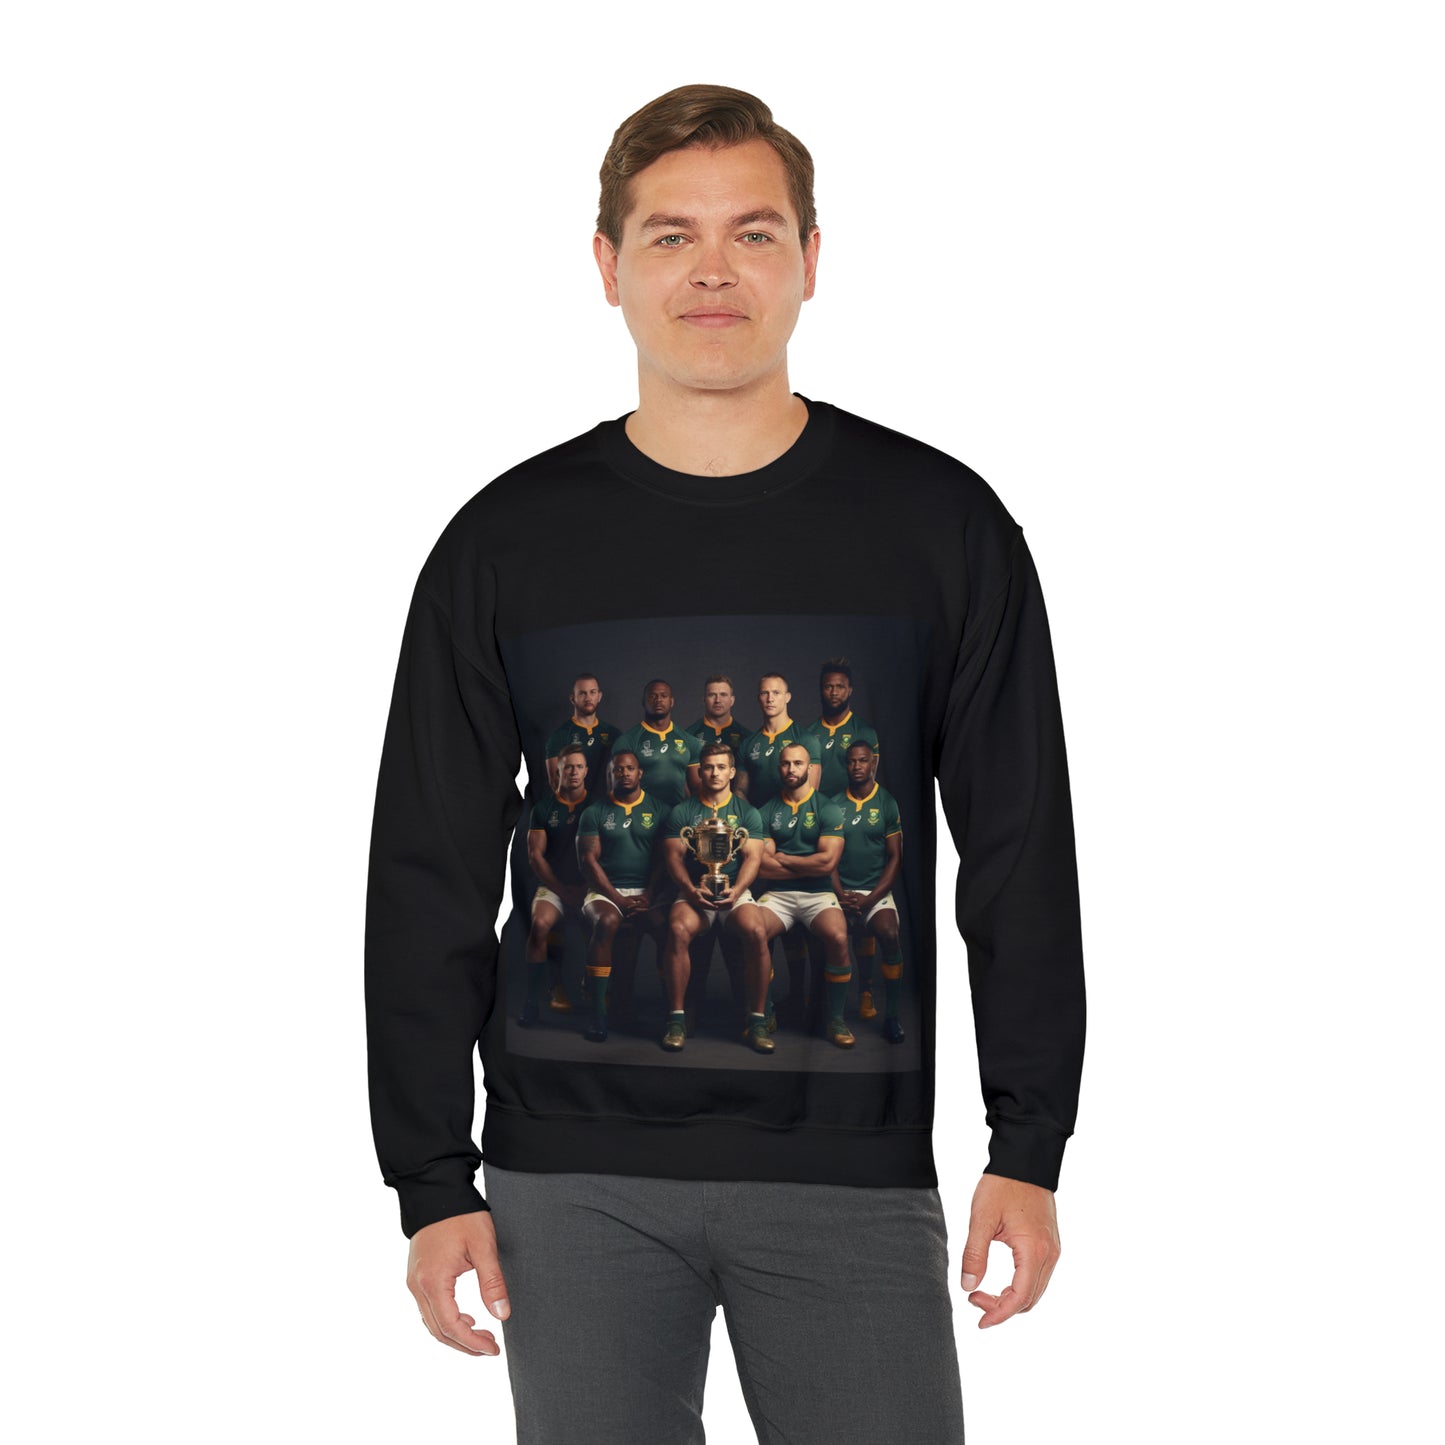 Springbok RWC photoshoot - black sweatshirts